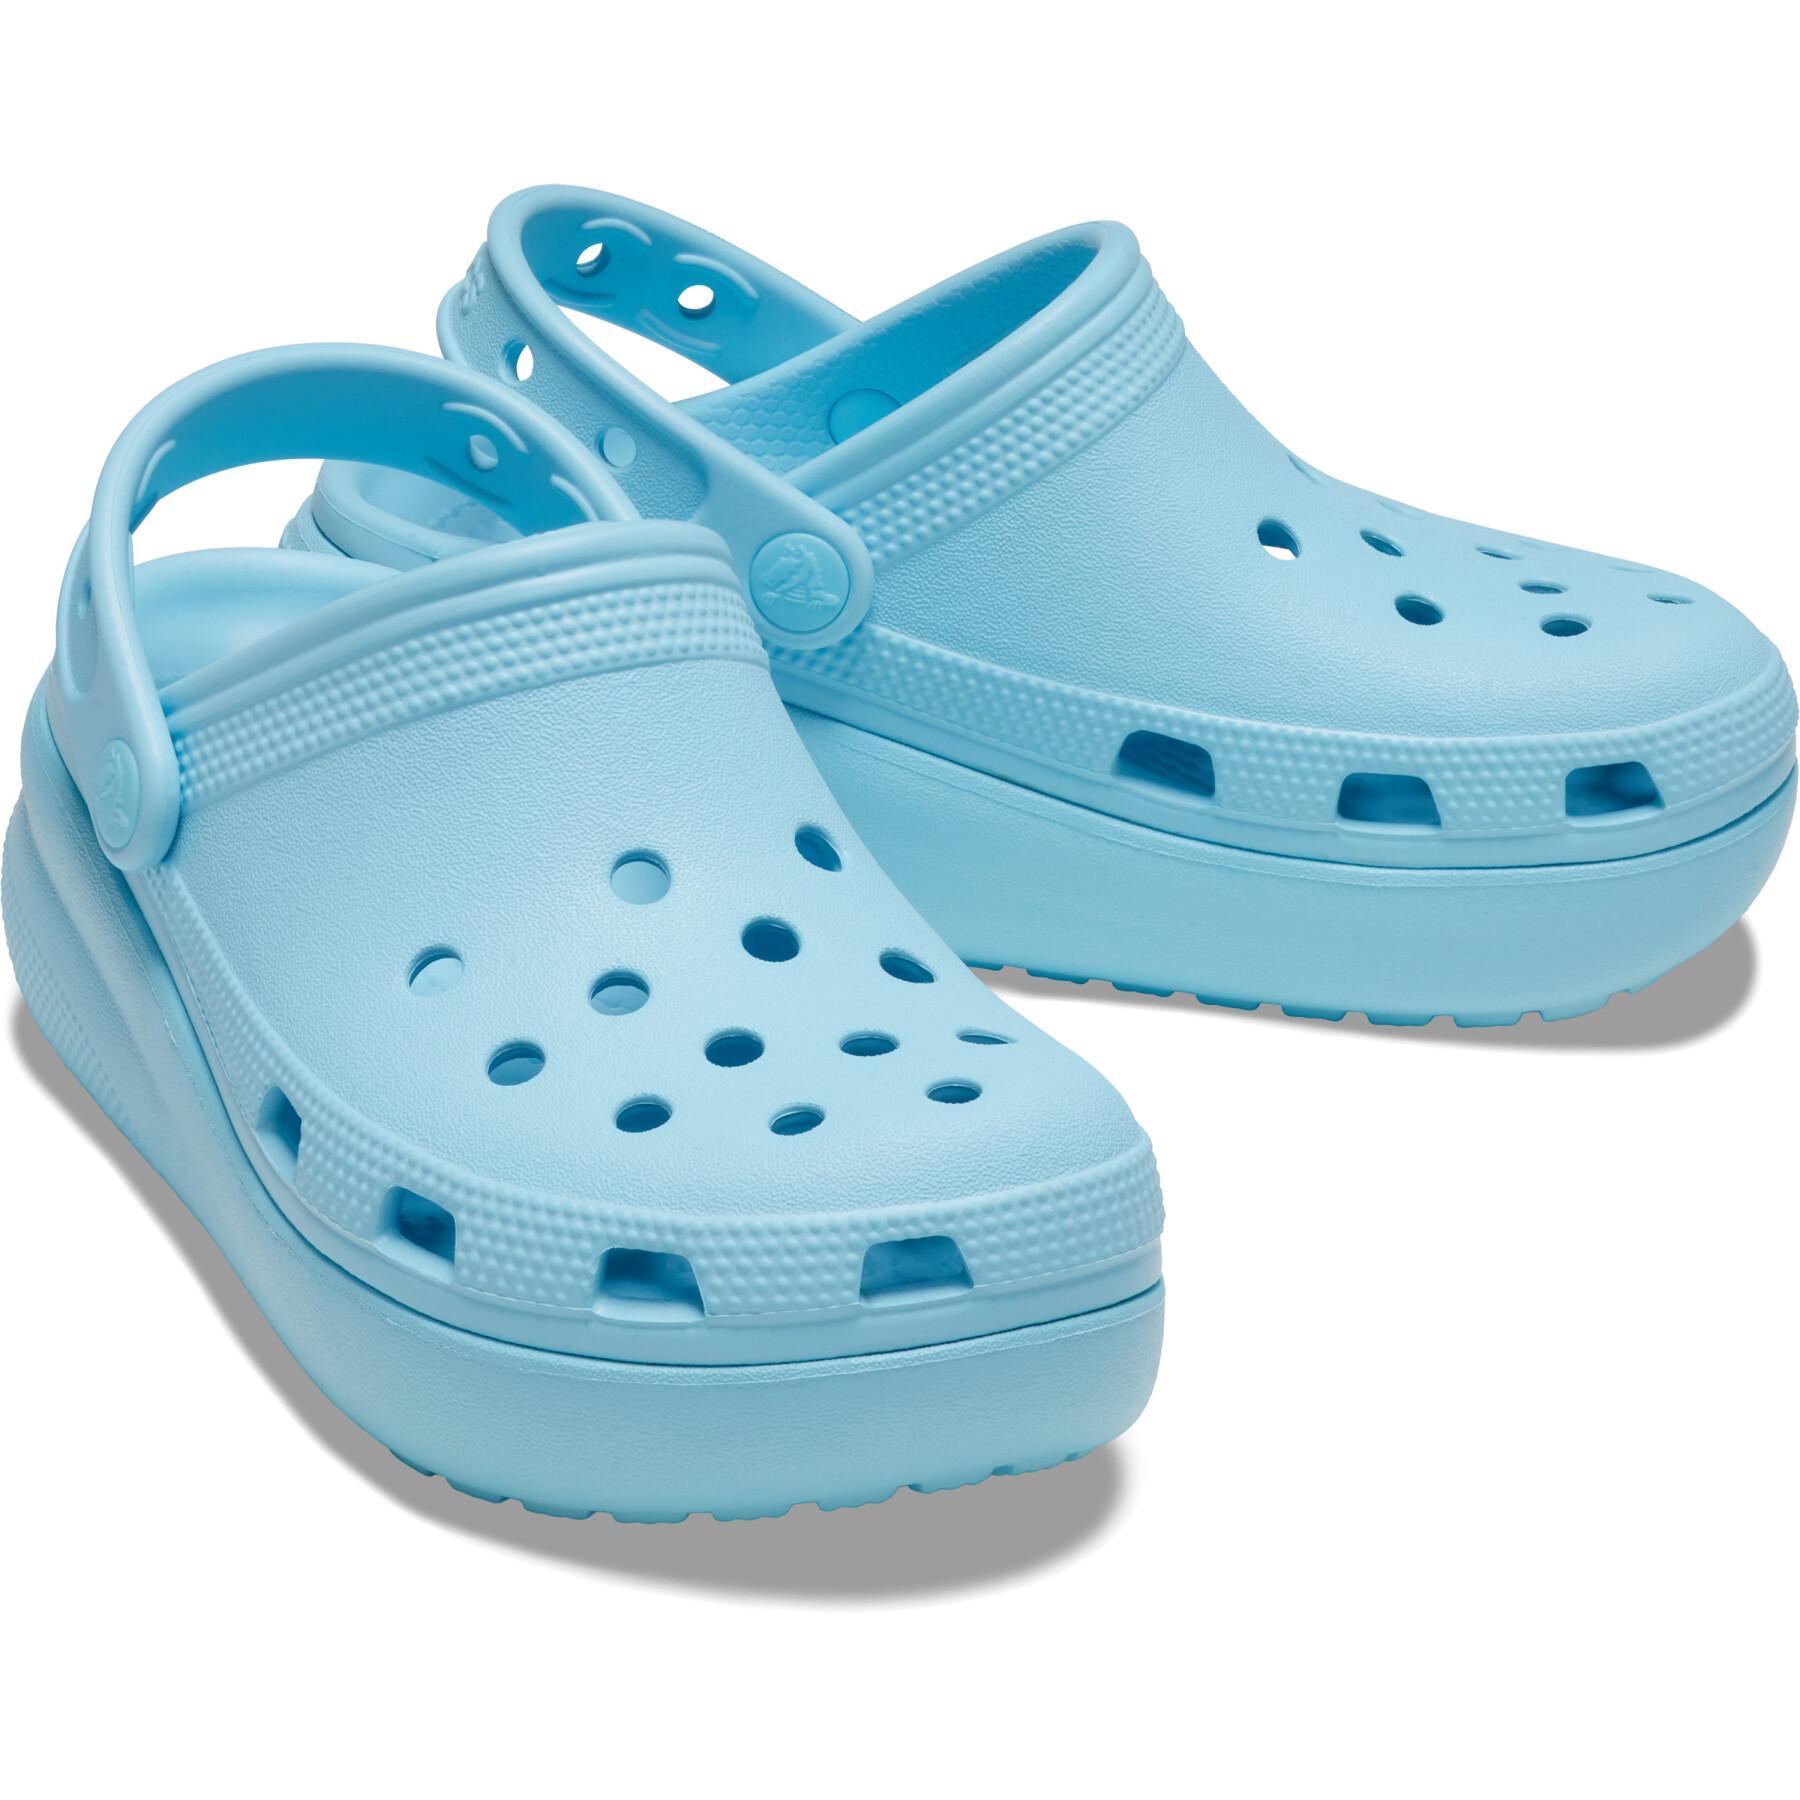 Children's clogs Crocs Cutie Crush